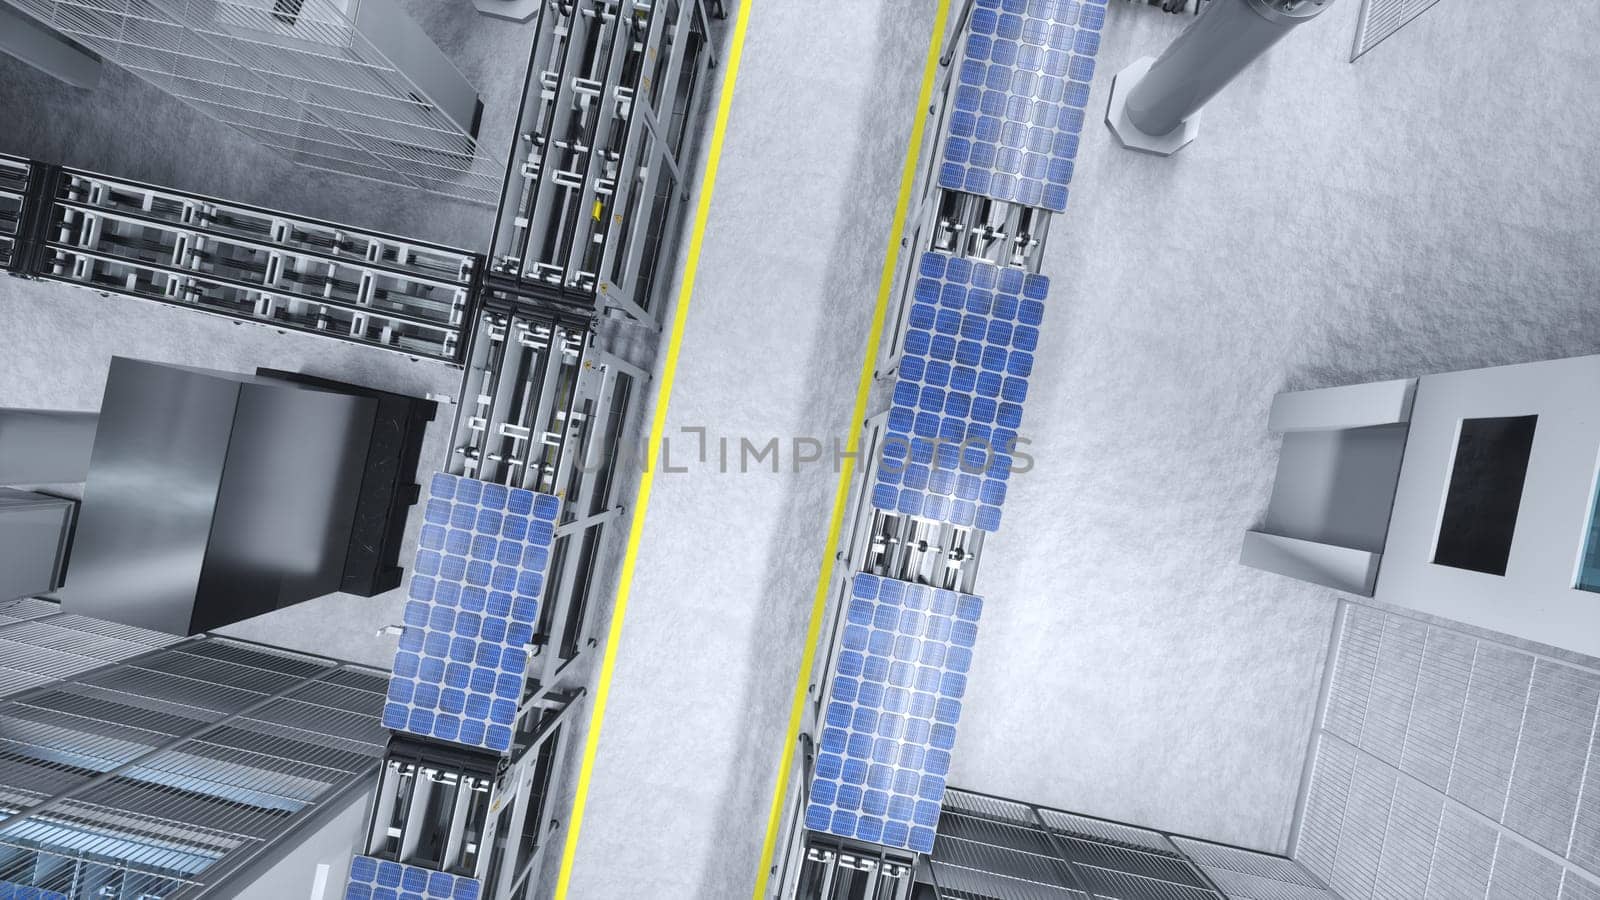 Top down view of solar panels on conveyor belts, 3D illustration by DCStudio